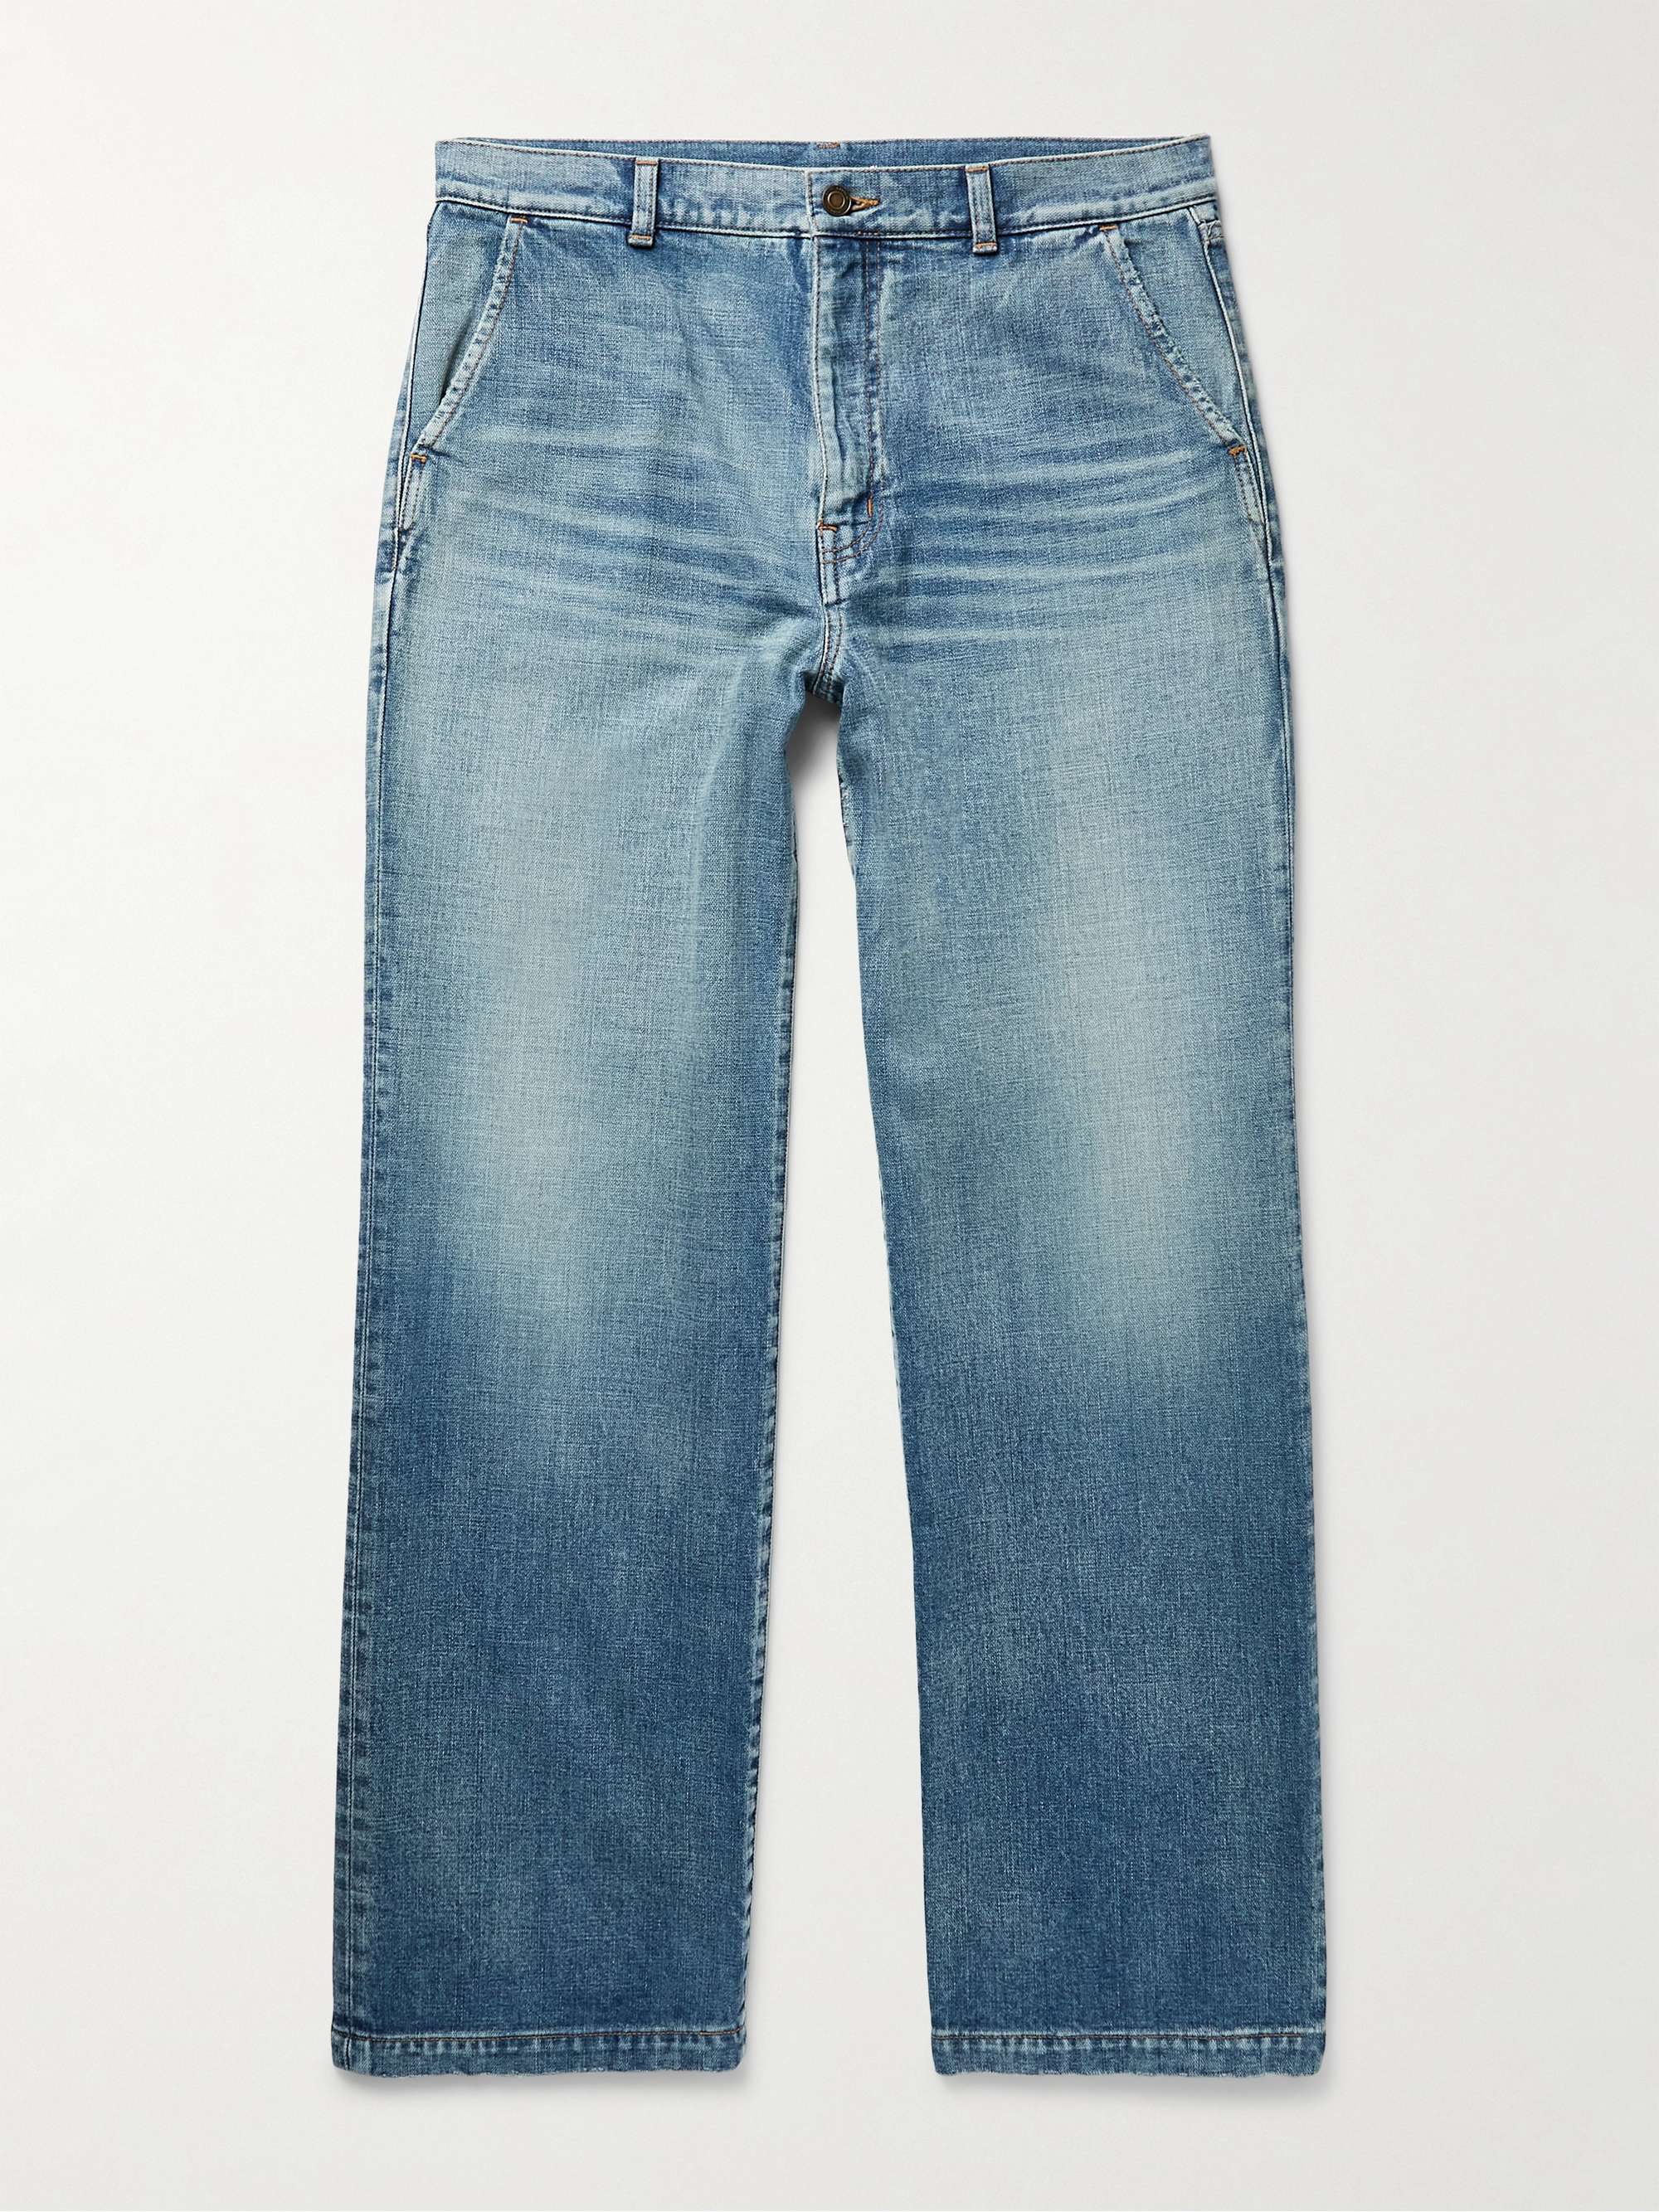 Saint Laurent Denim High-Rise Straight Jeans Serge in Blau Damen Bekleidung Jeans Schlagjeans 